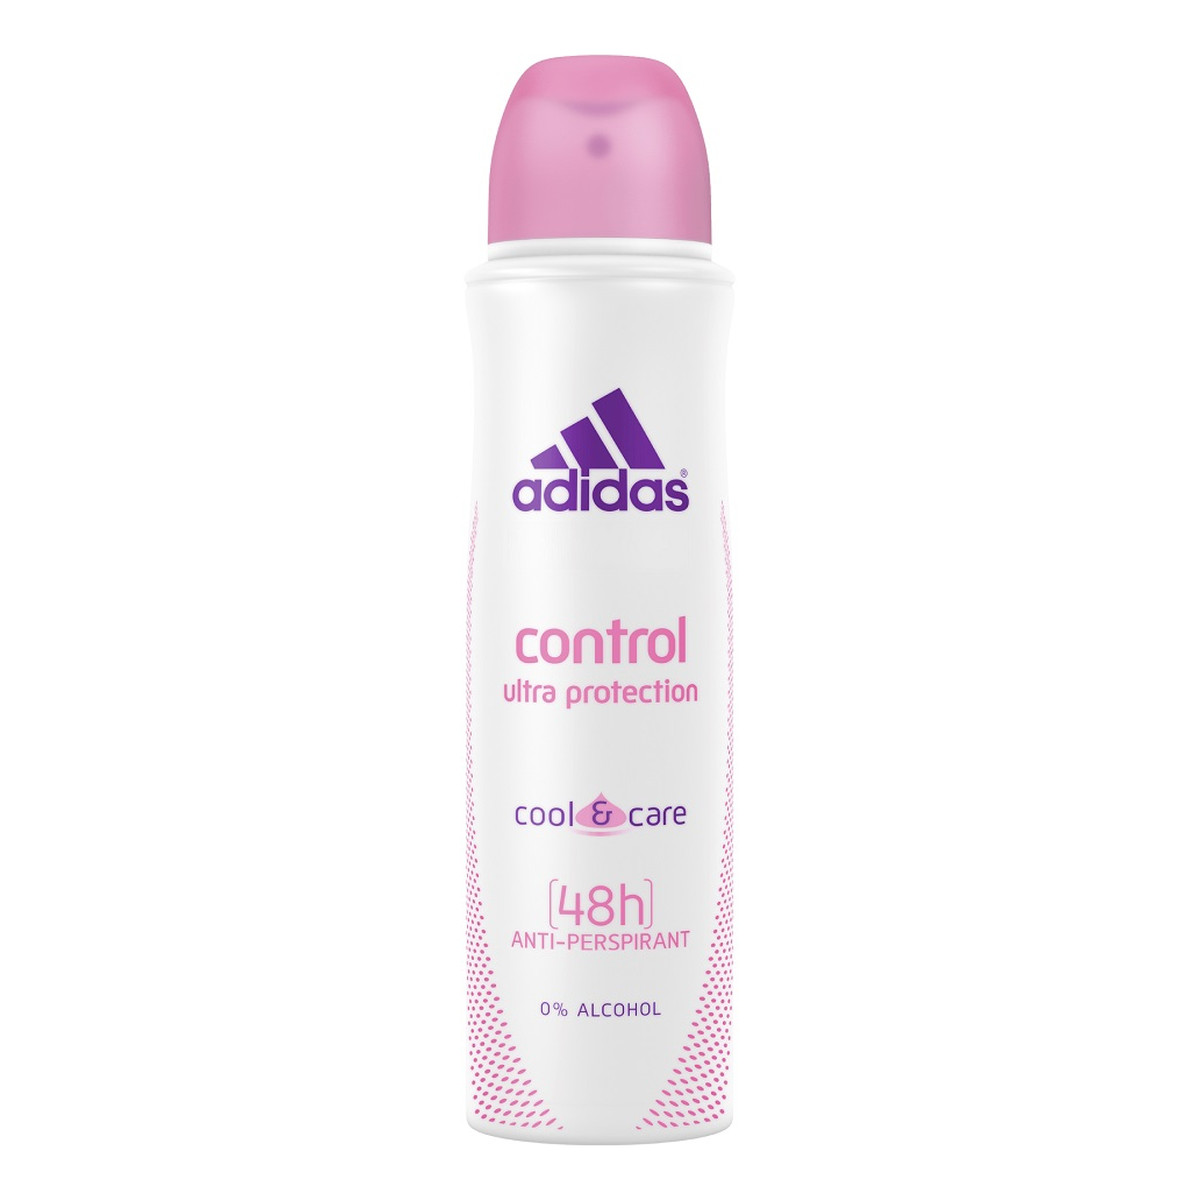 Adidas Control ultra protection antyperspirant spray 150ml